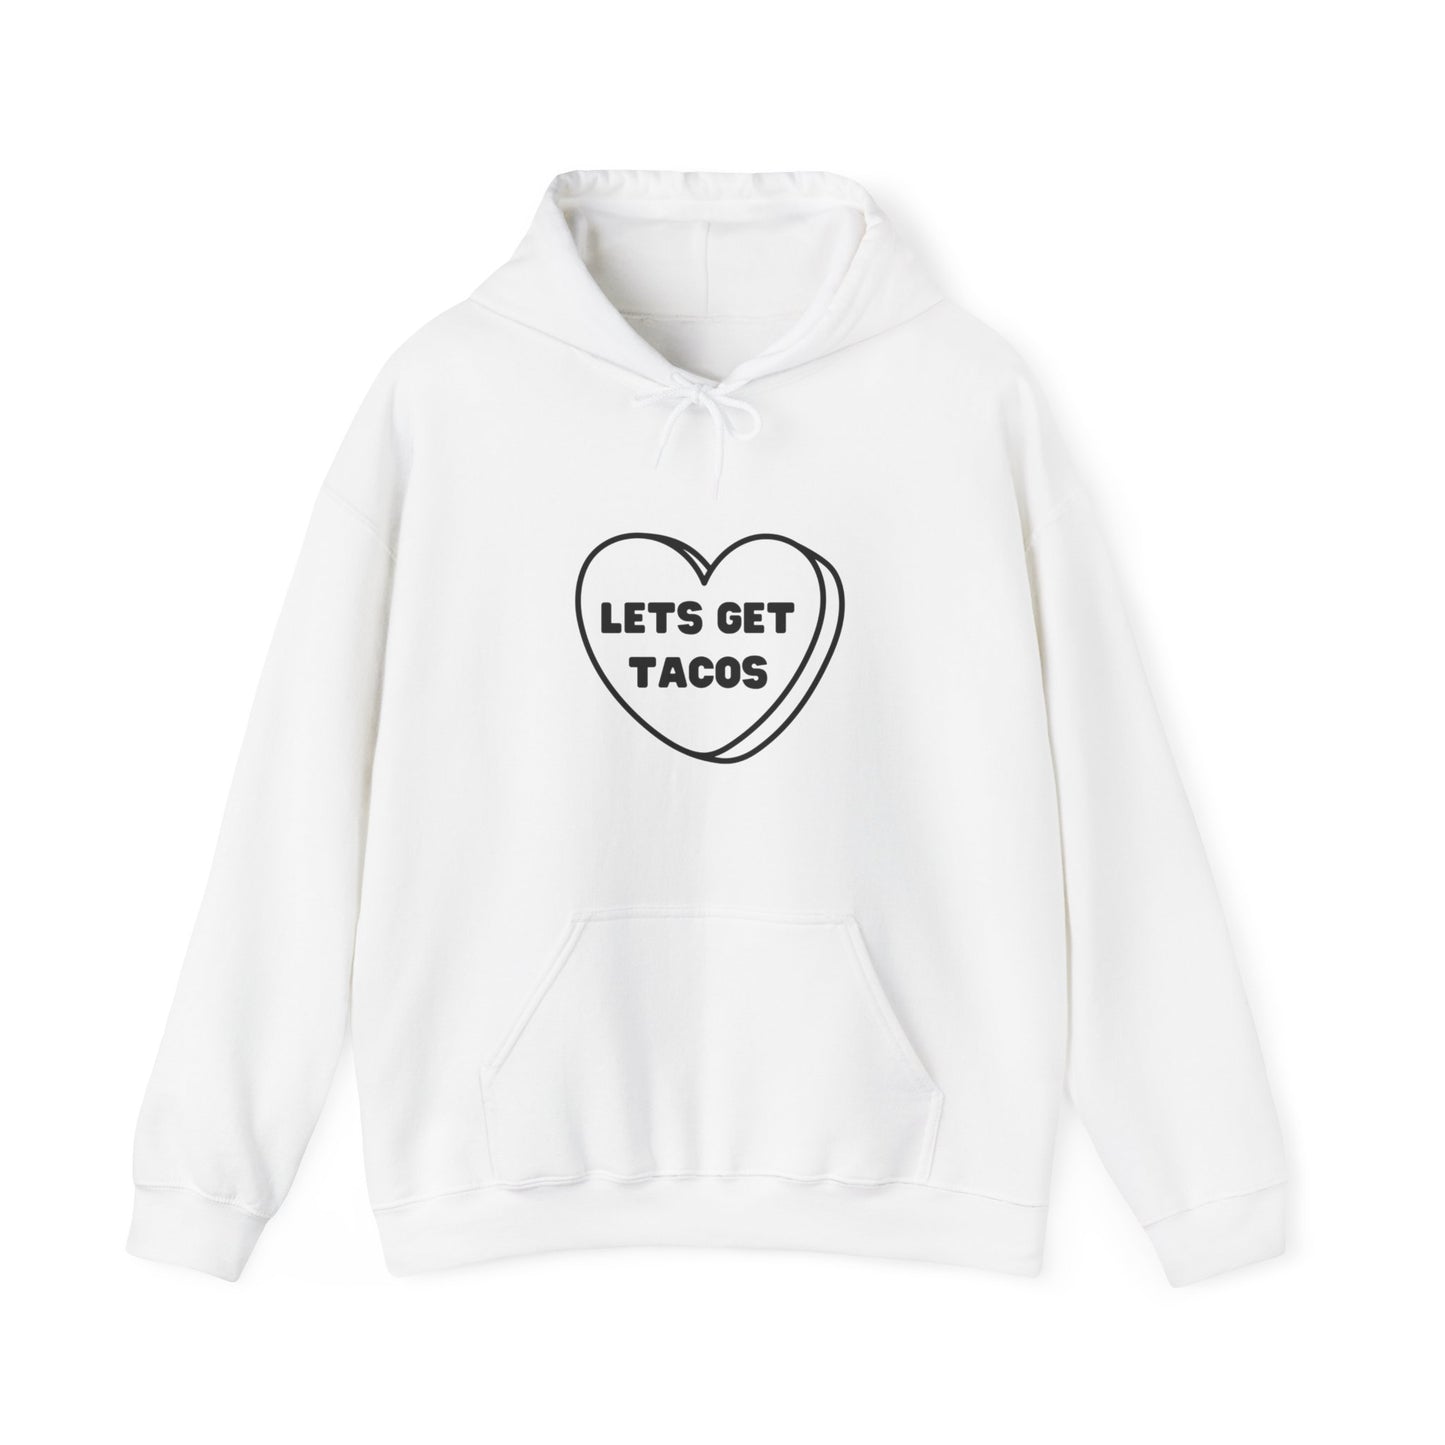 Let's Get Tacos Funny Hooded Sweatshirt